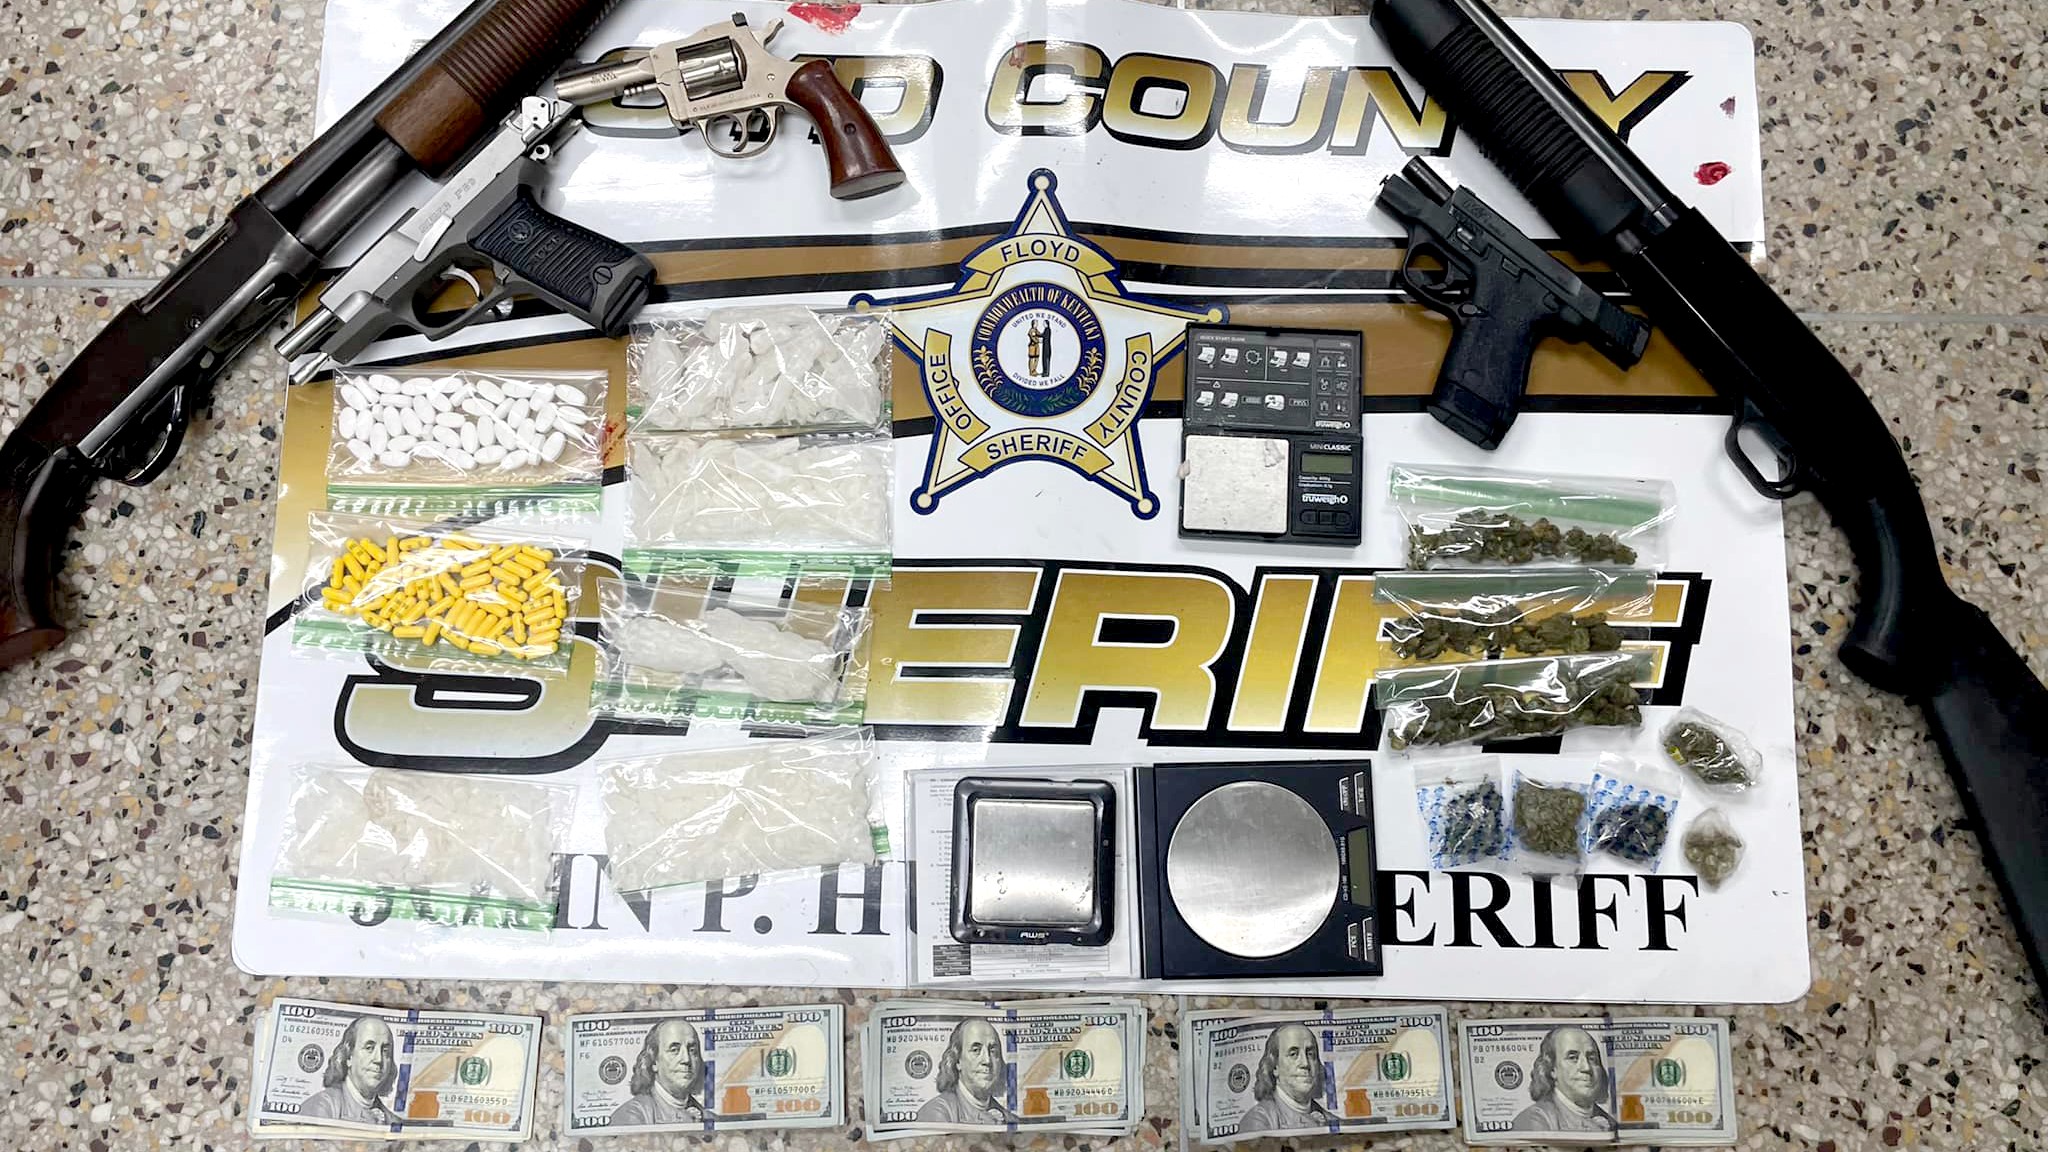 Deputies find a pound of meth, other items in Floyd raid